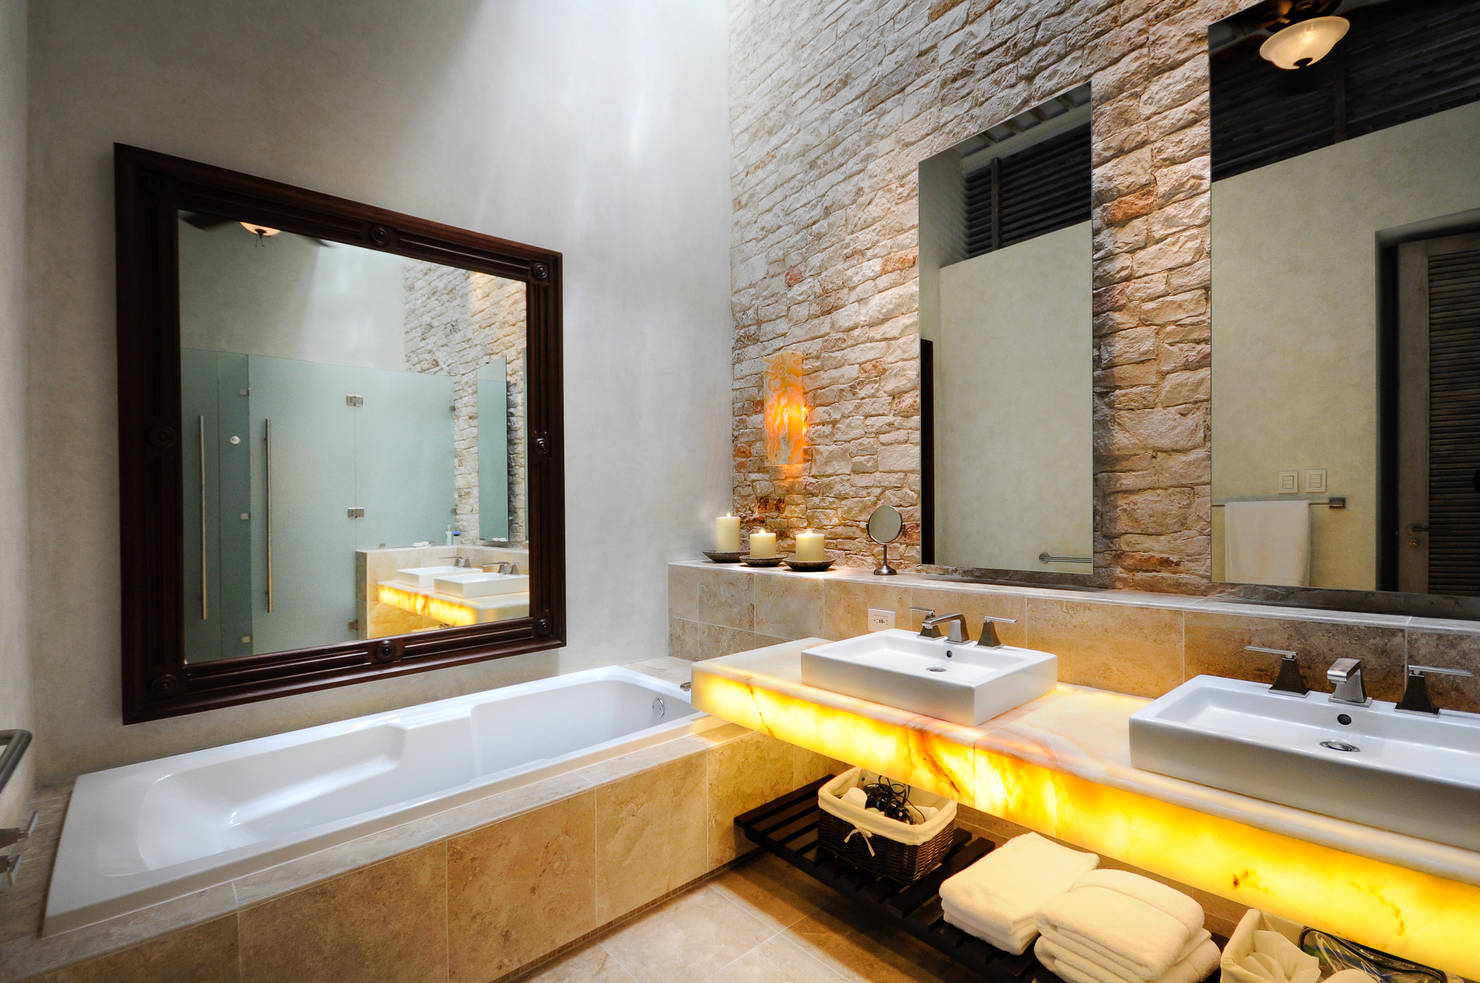 На фото - 10 красивых ванных комнат, оформленных натуральным камнем
				